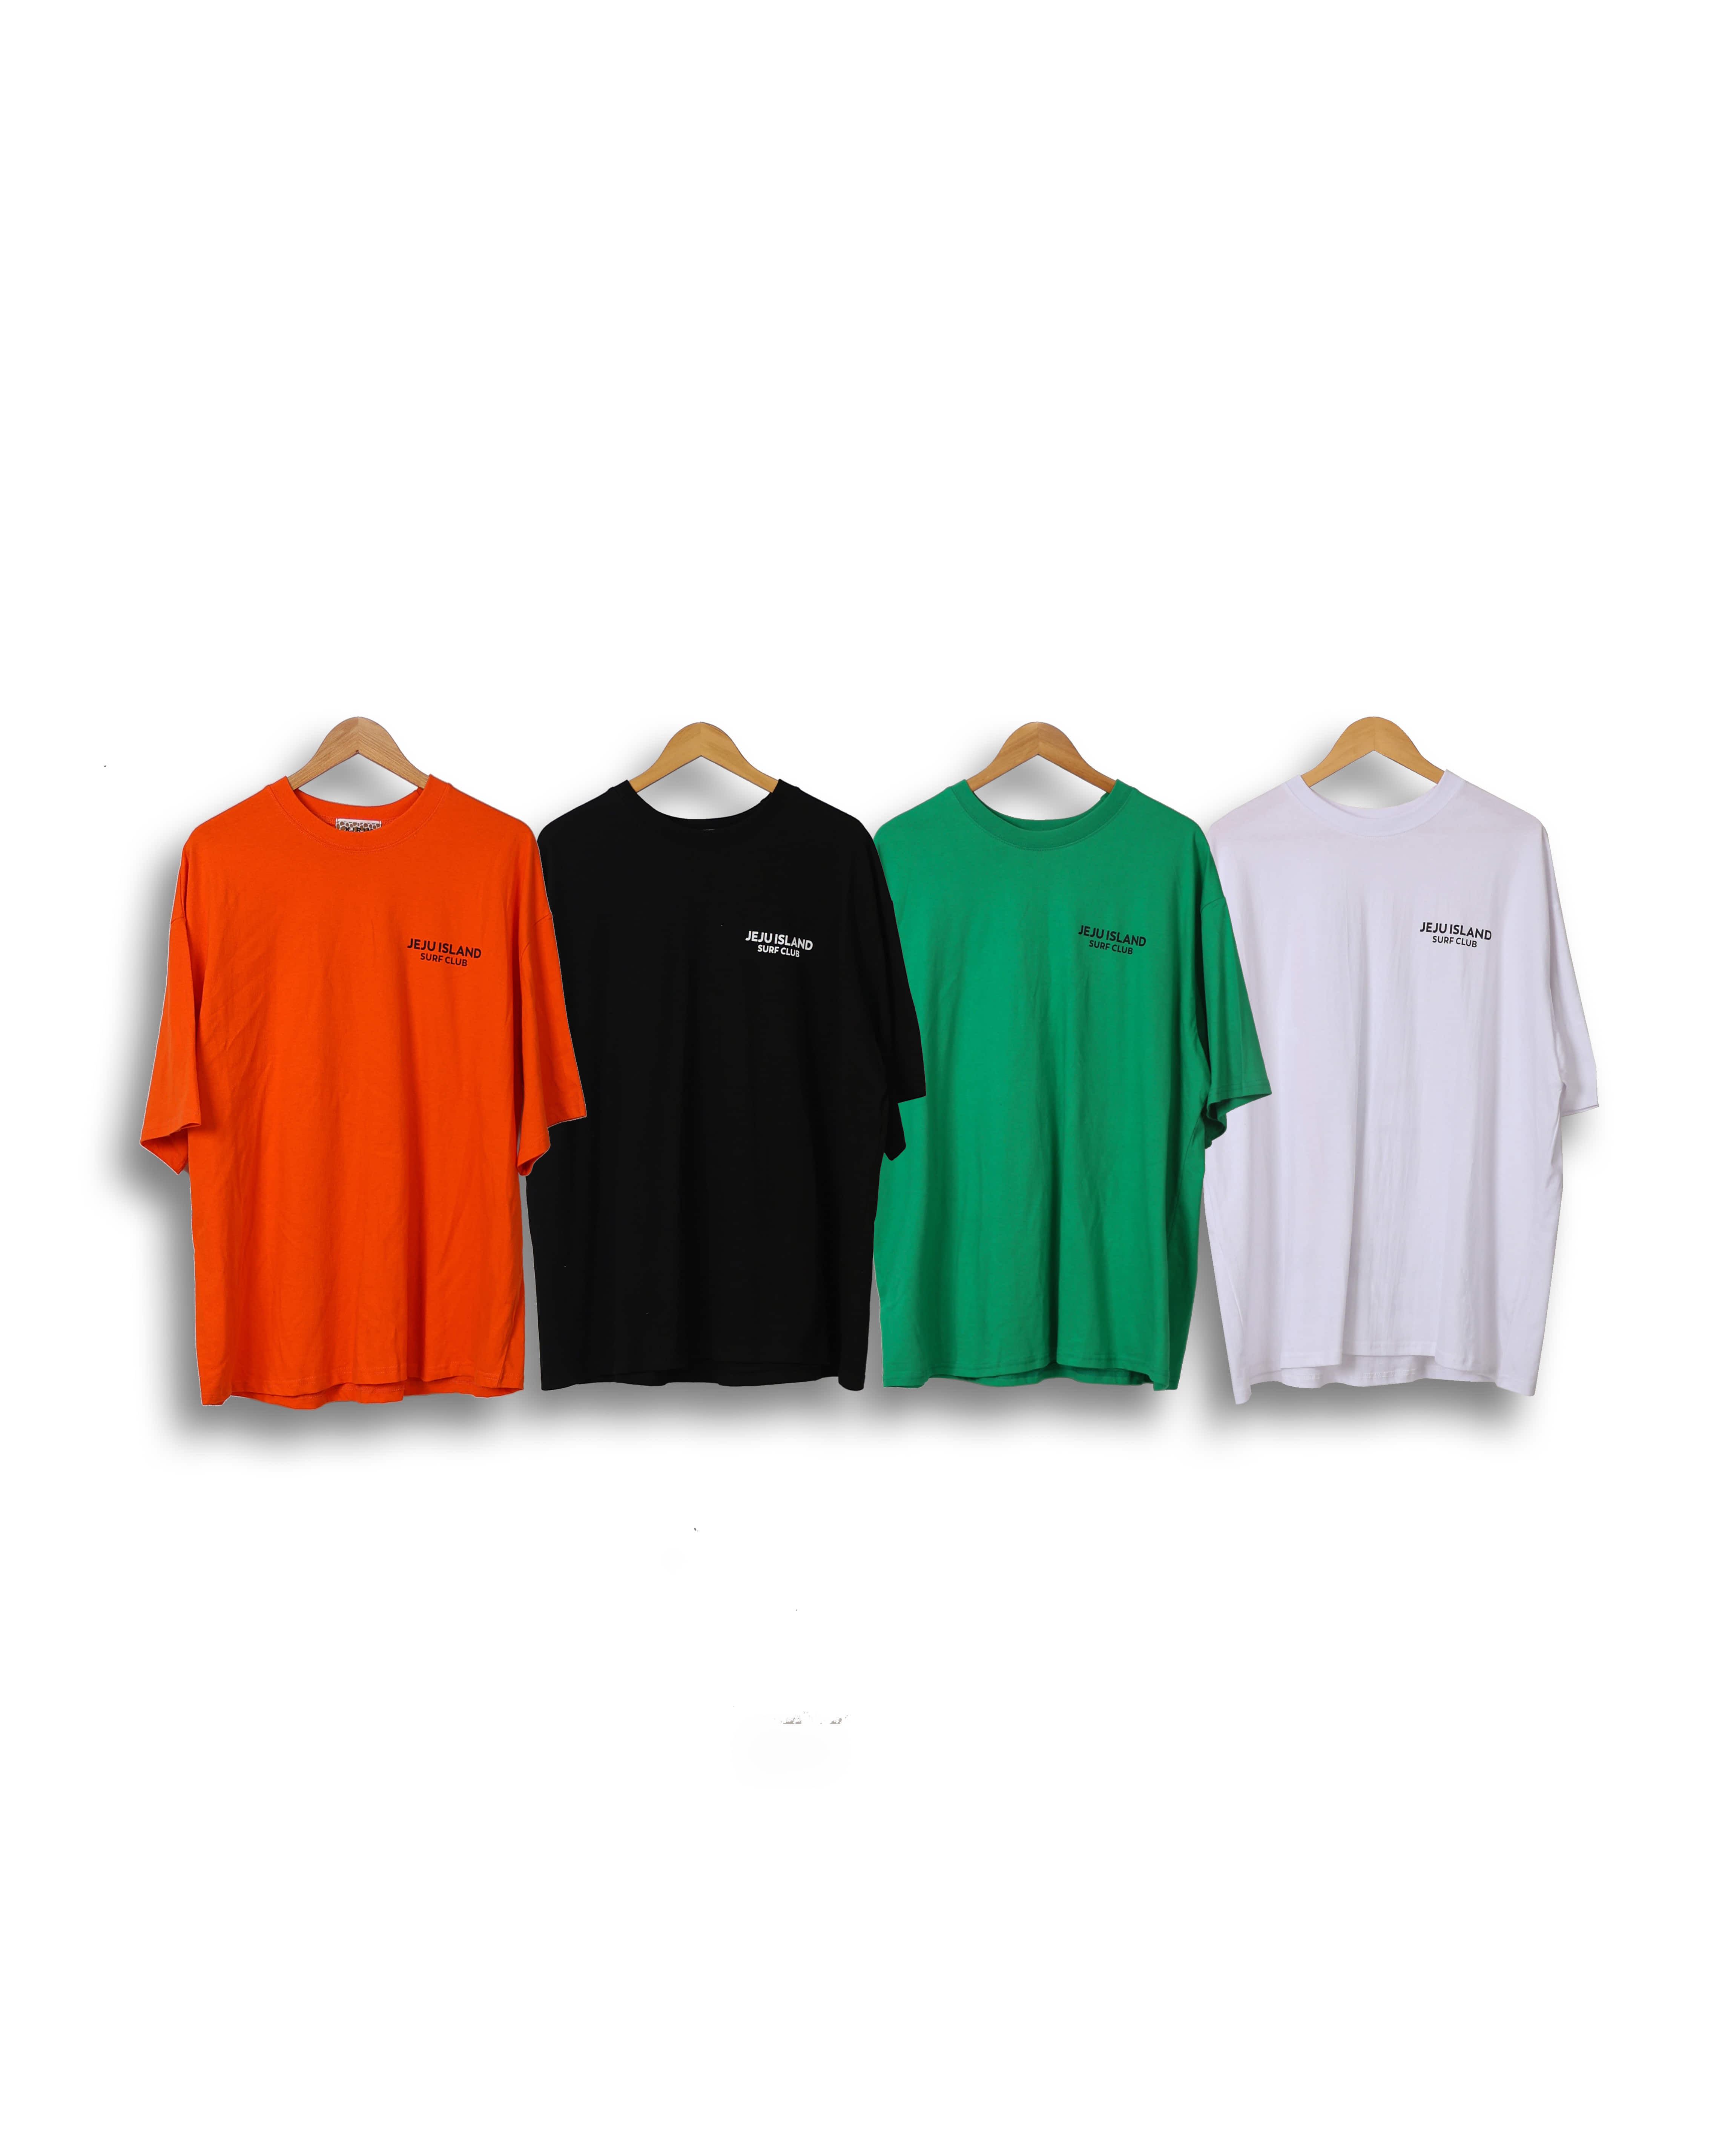 JEJU Surfing Printed Casual T Shirts (Black/Orange/Green/White)